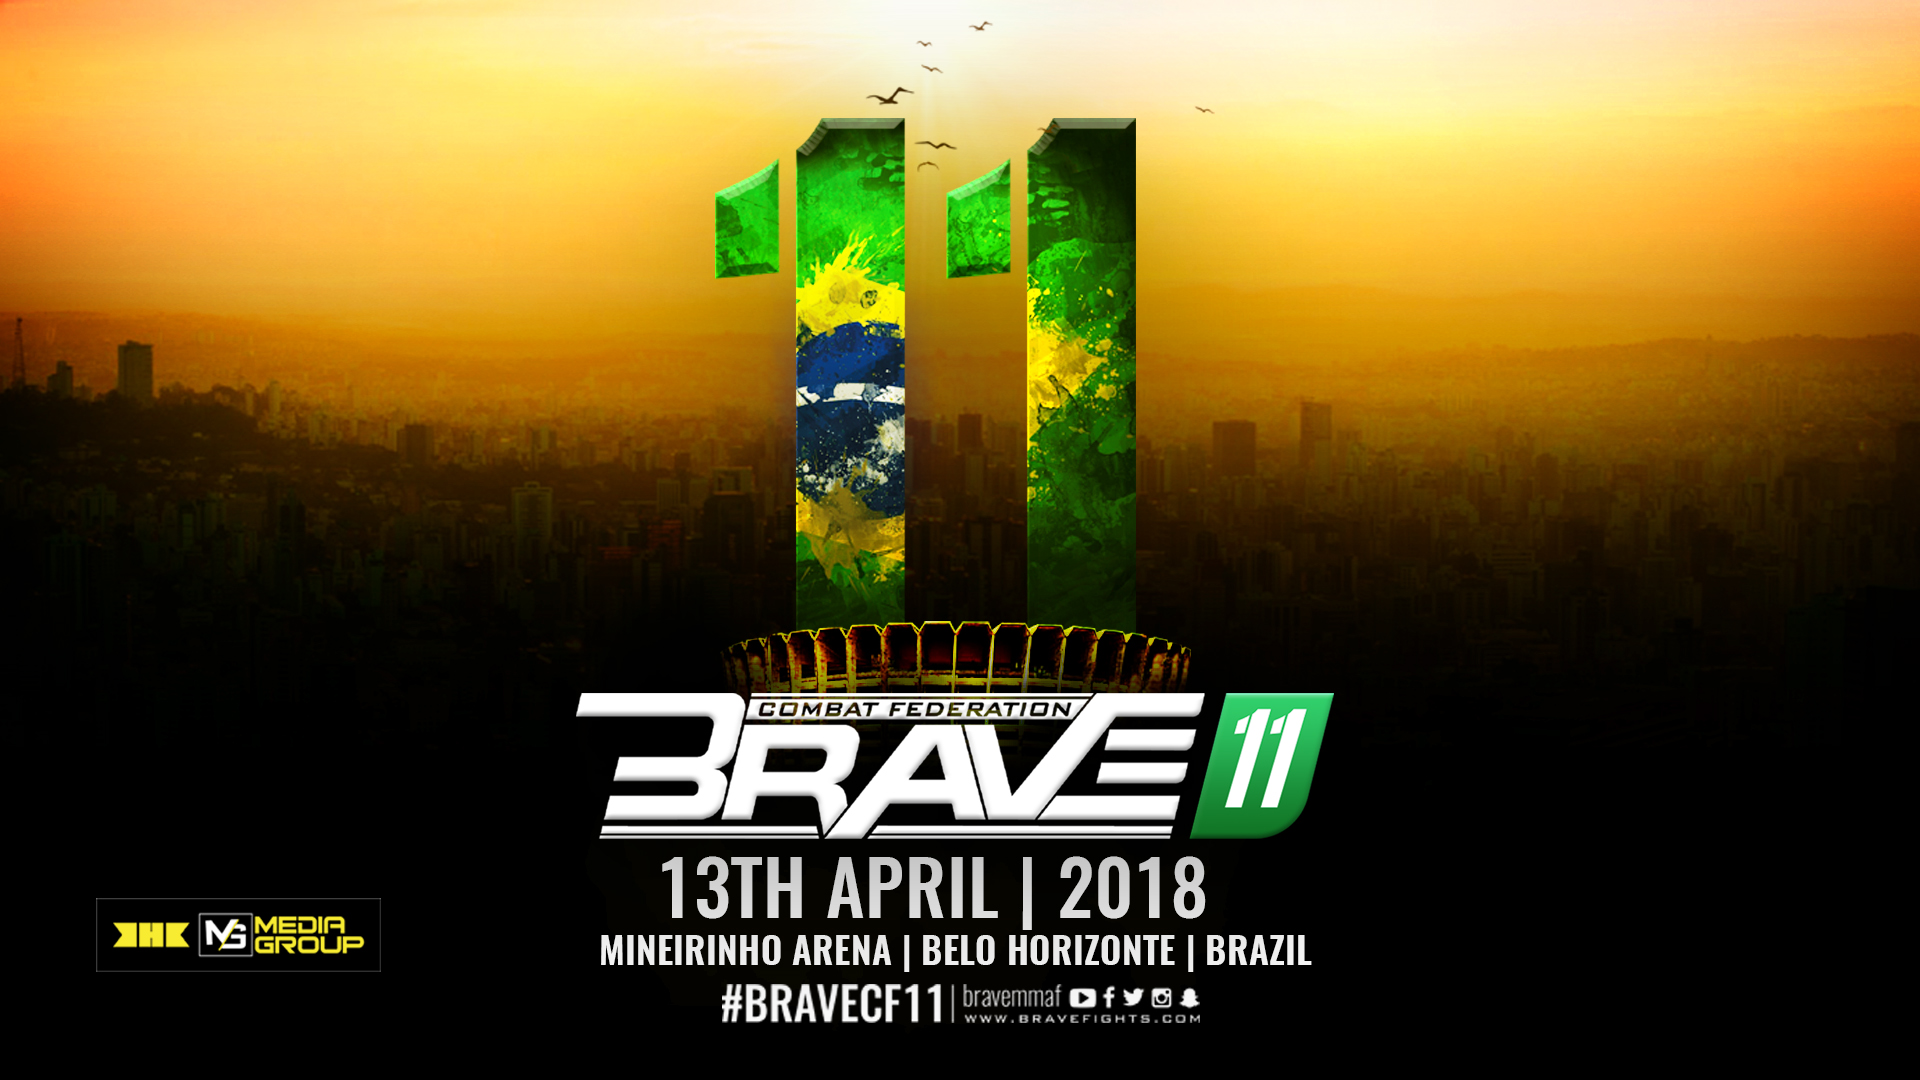 Brave Combat Federation announces event in Brazil -